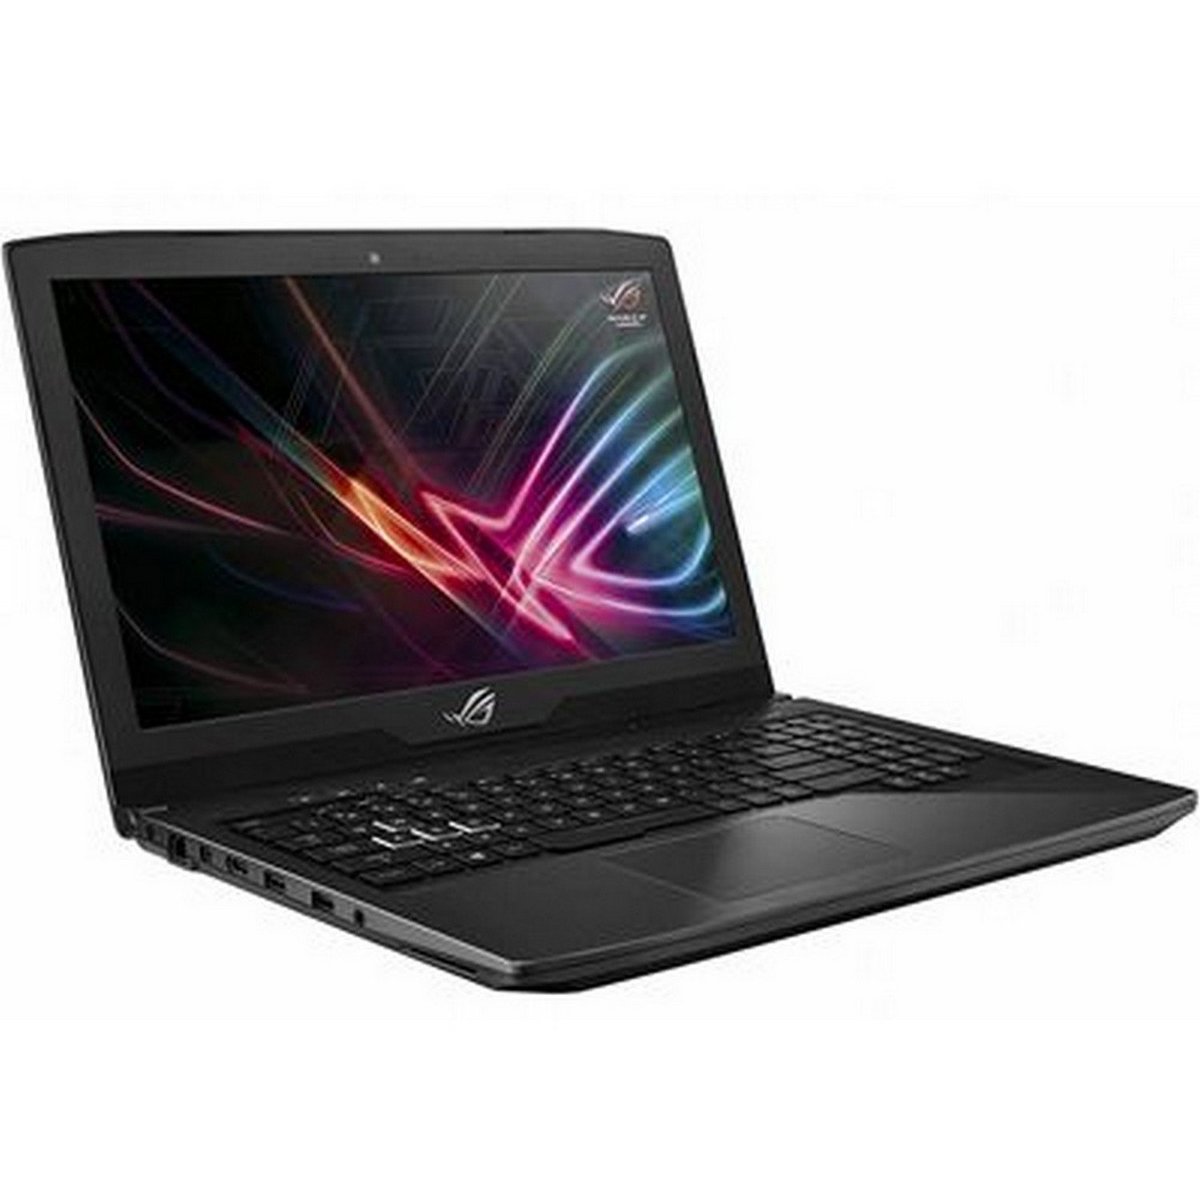 Asus ROG Strix Gaming Laptop GL703GS-E5010T Core i7 Black